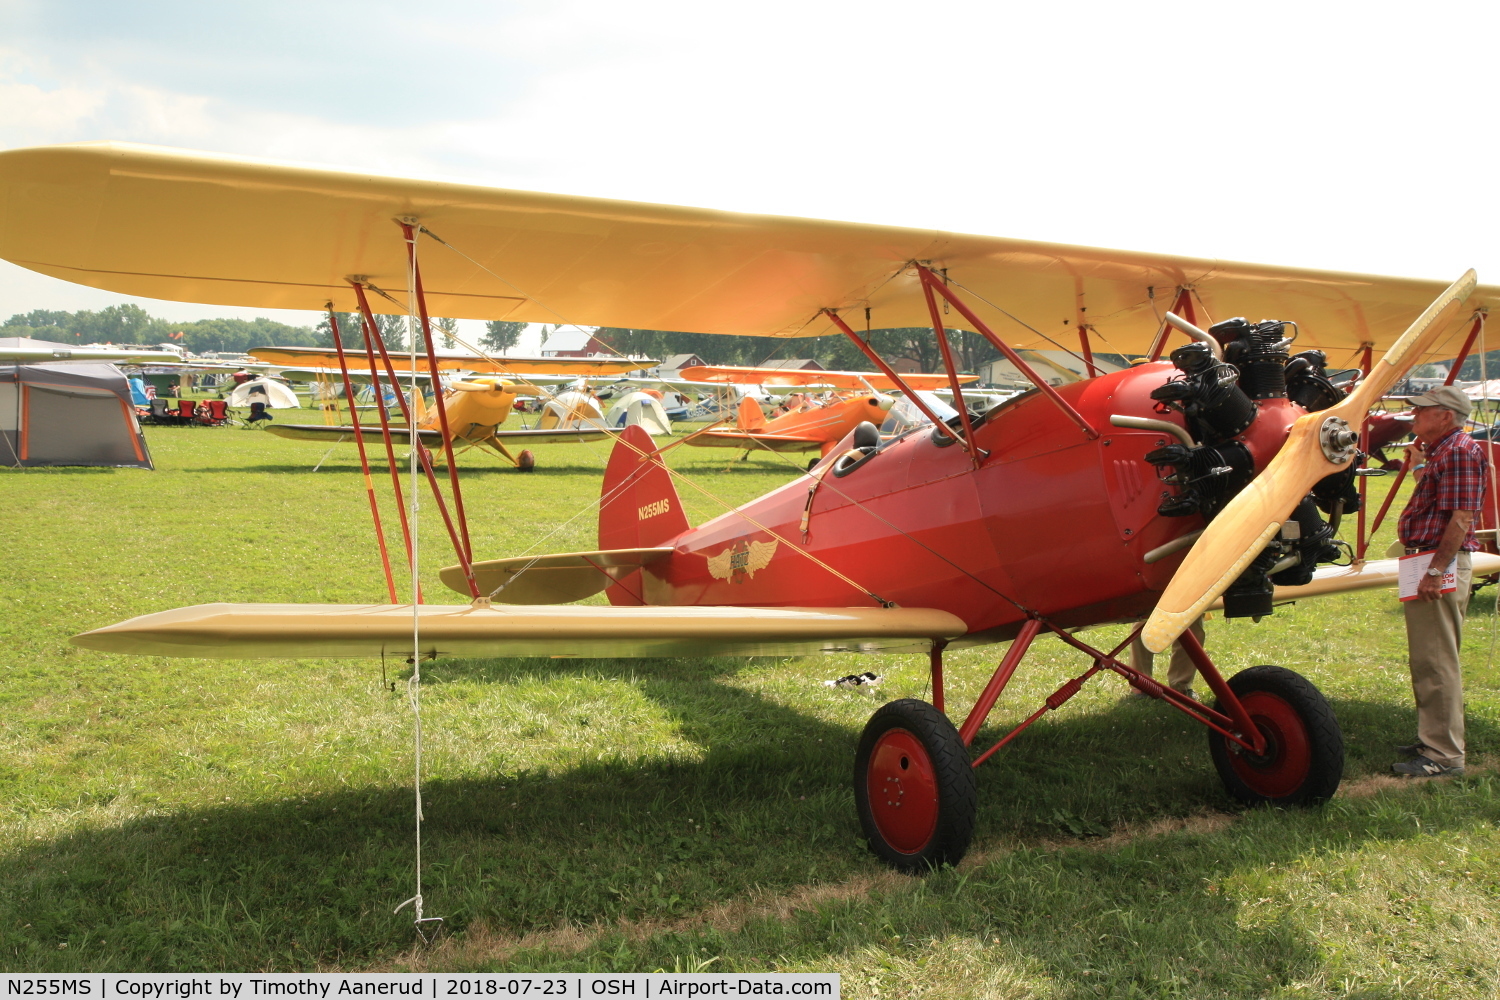 N255MS, 2004 Hatz Biplane C/N 1, 2004 Hatz Biplane, c/n: 1